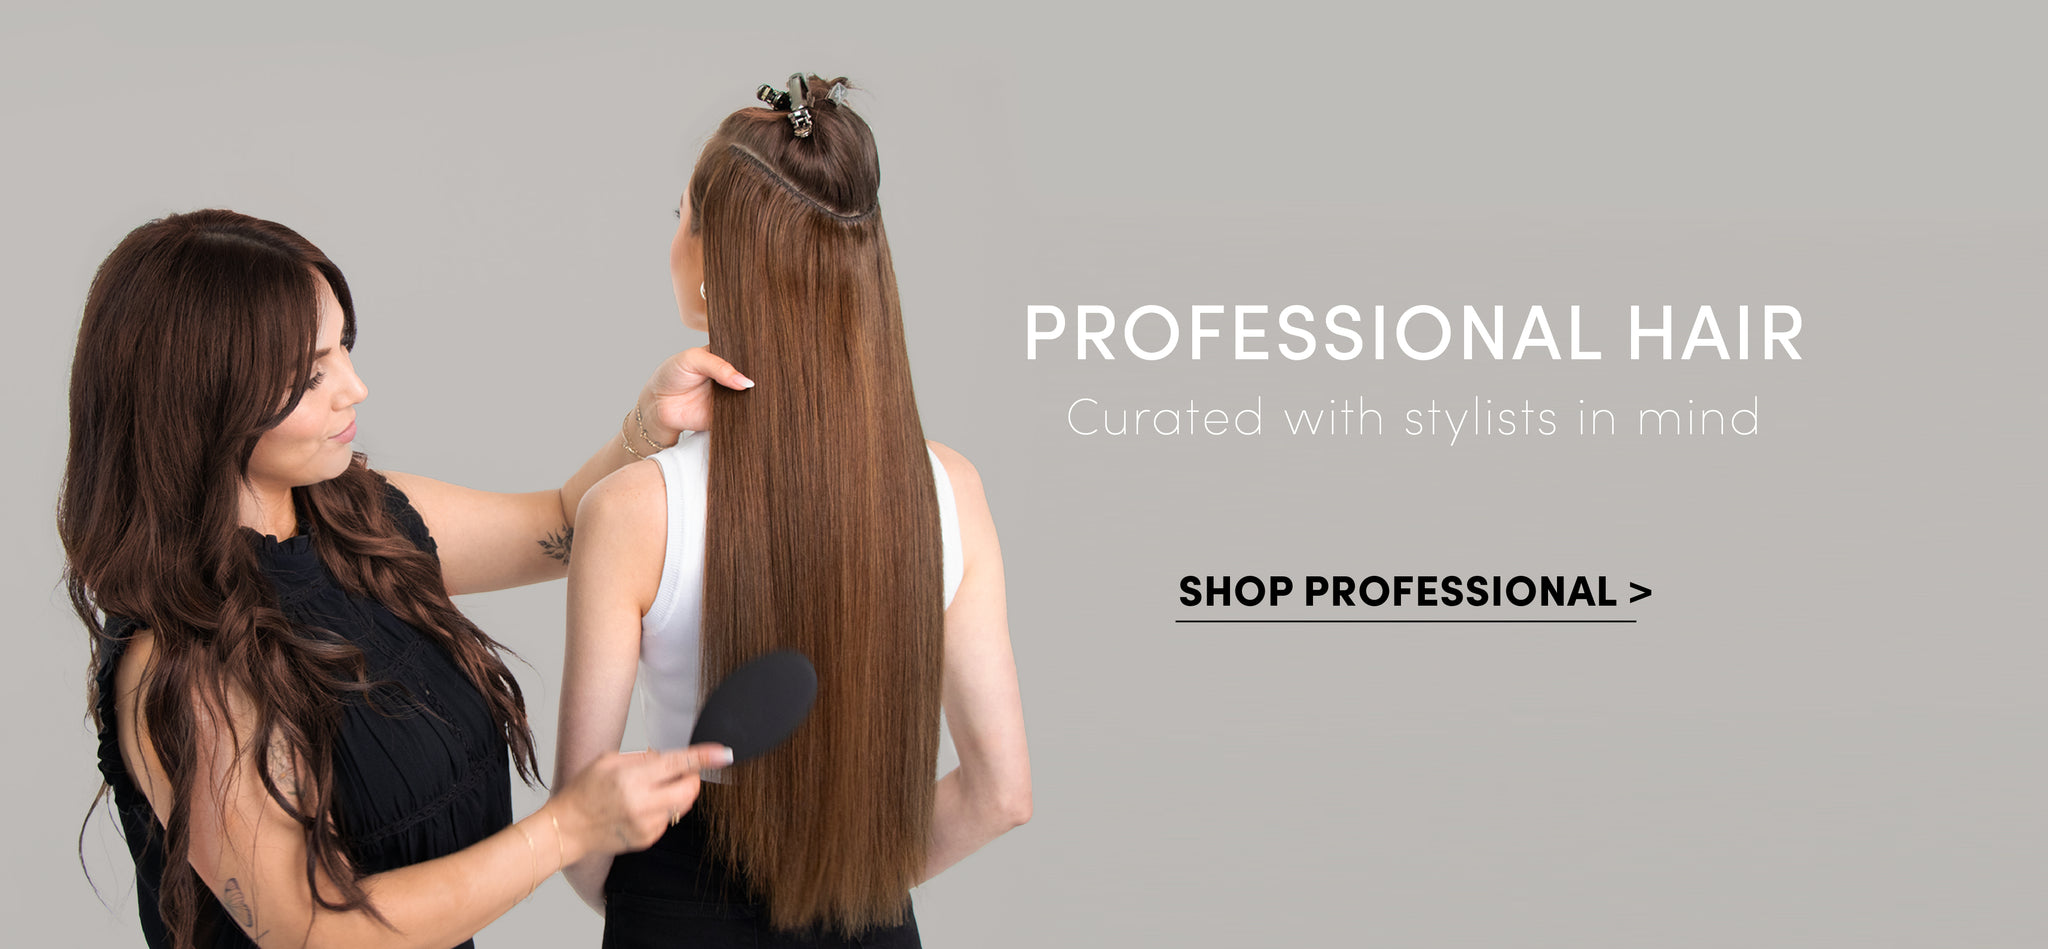 Extension Master Kit  The Hair Shop – The Hair Shop, Inc.